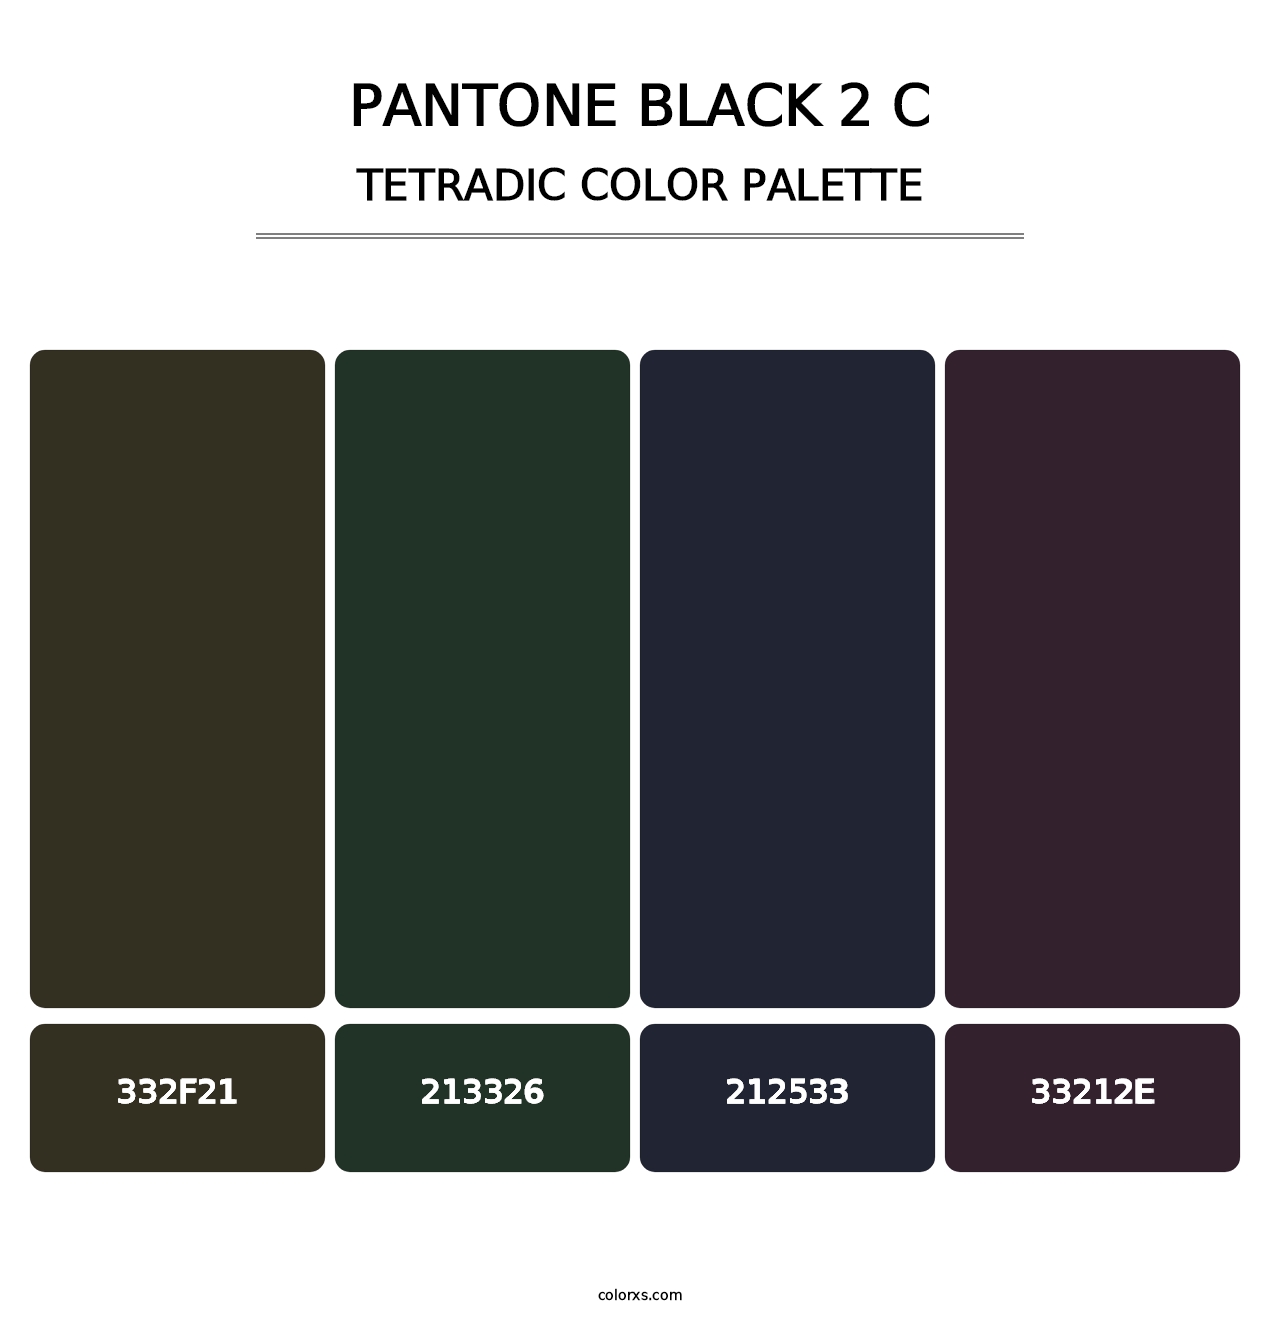 PANTONE Black 2 C - Tetradic Color Palette